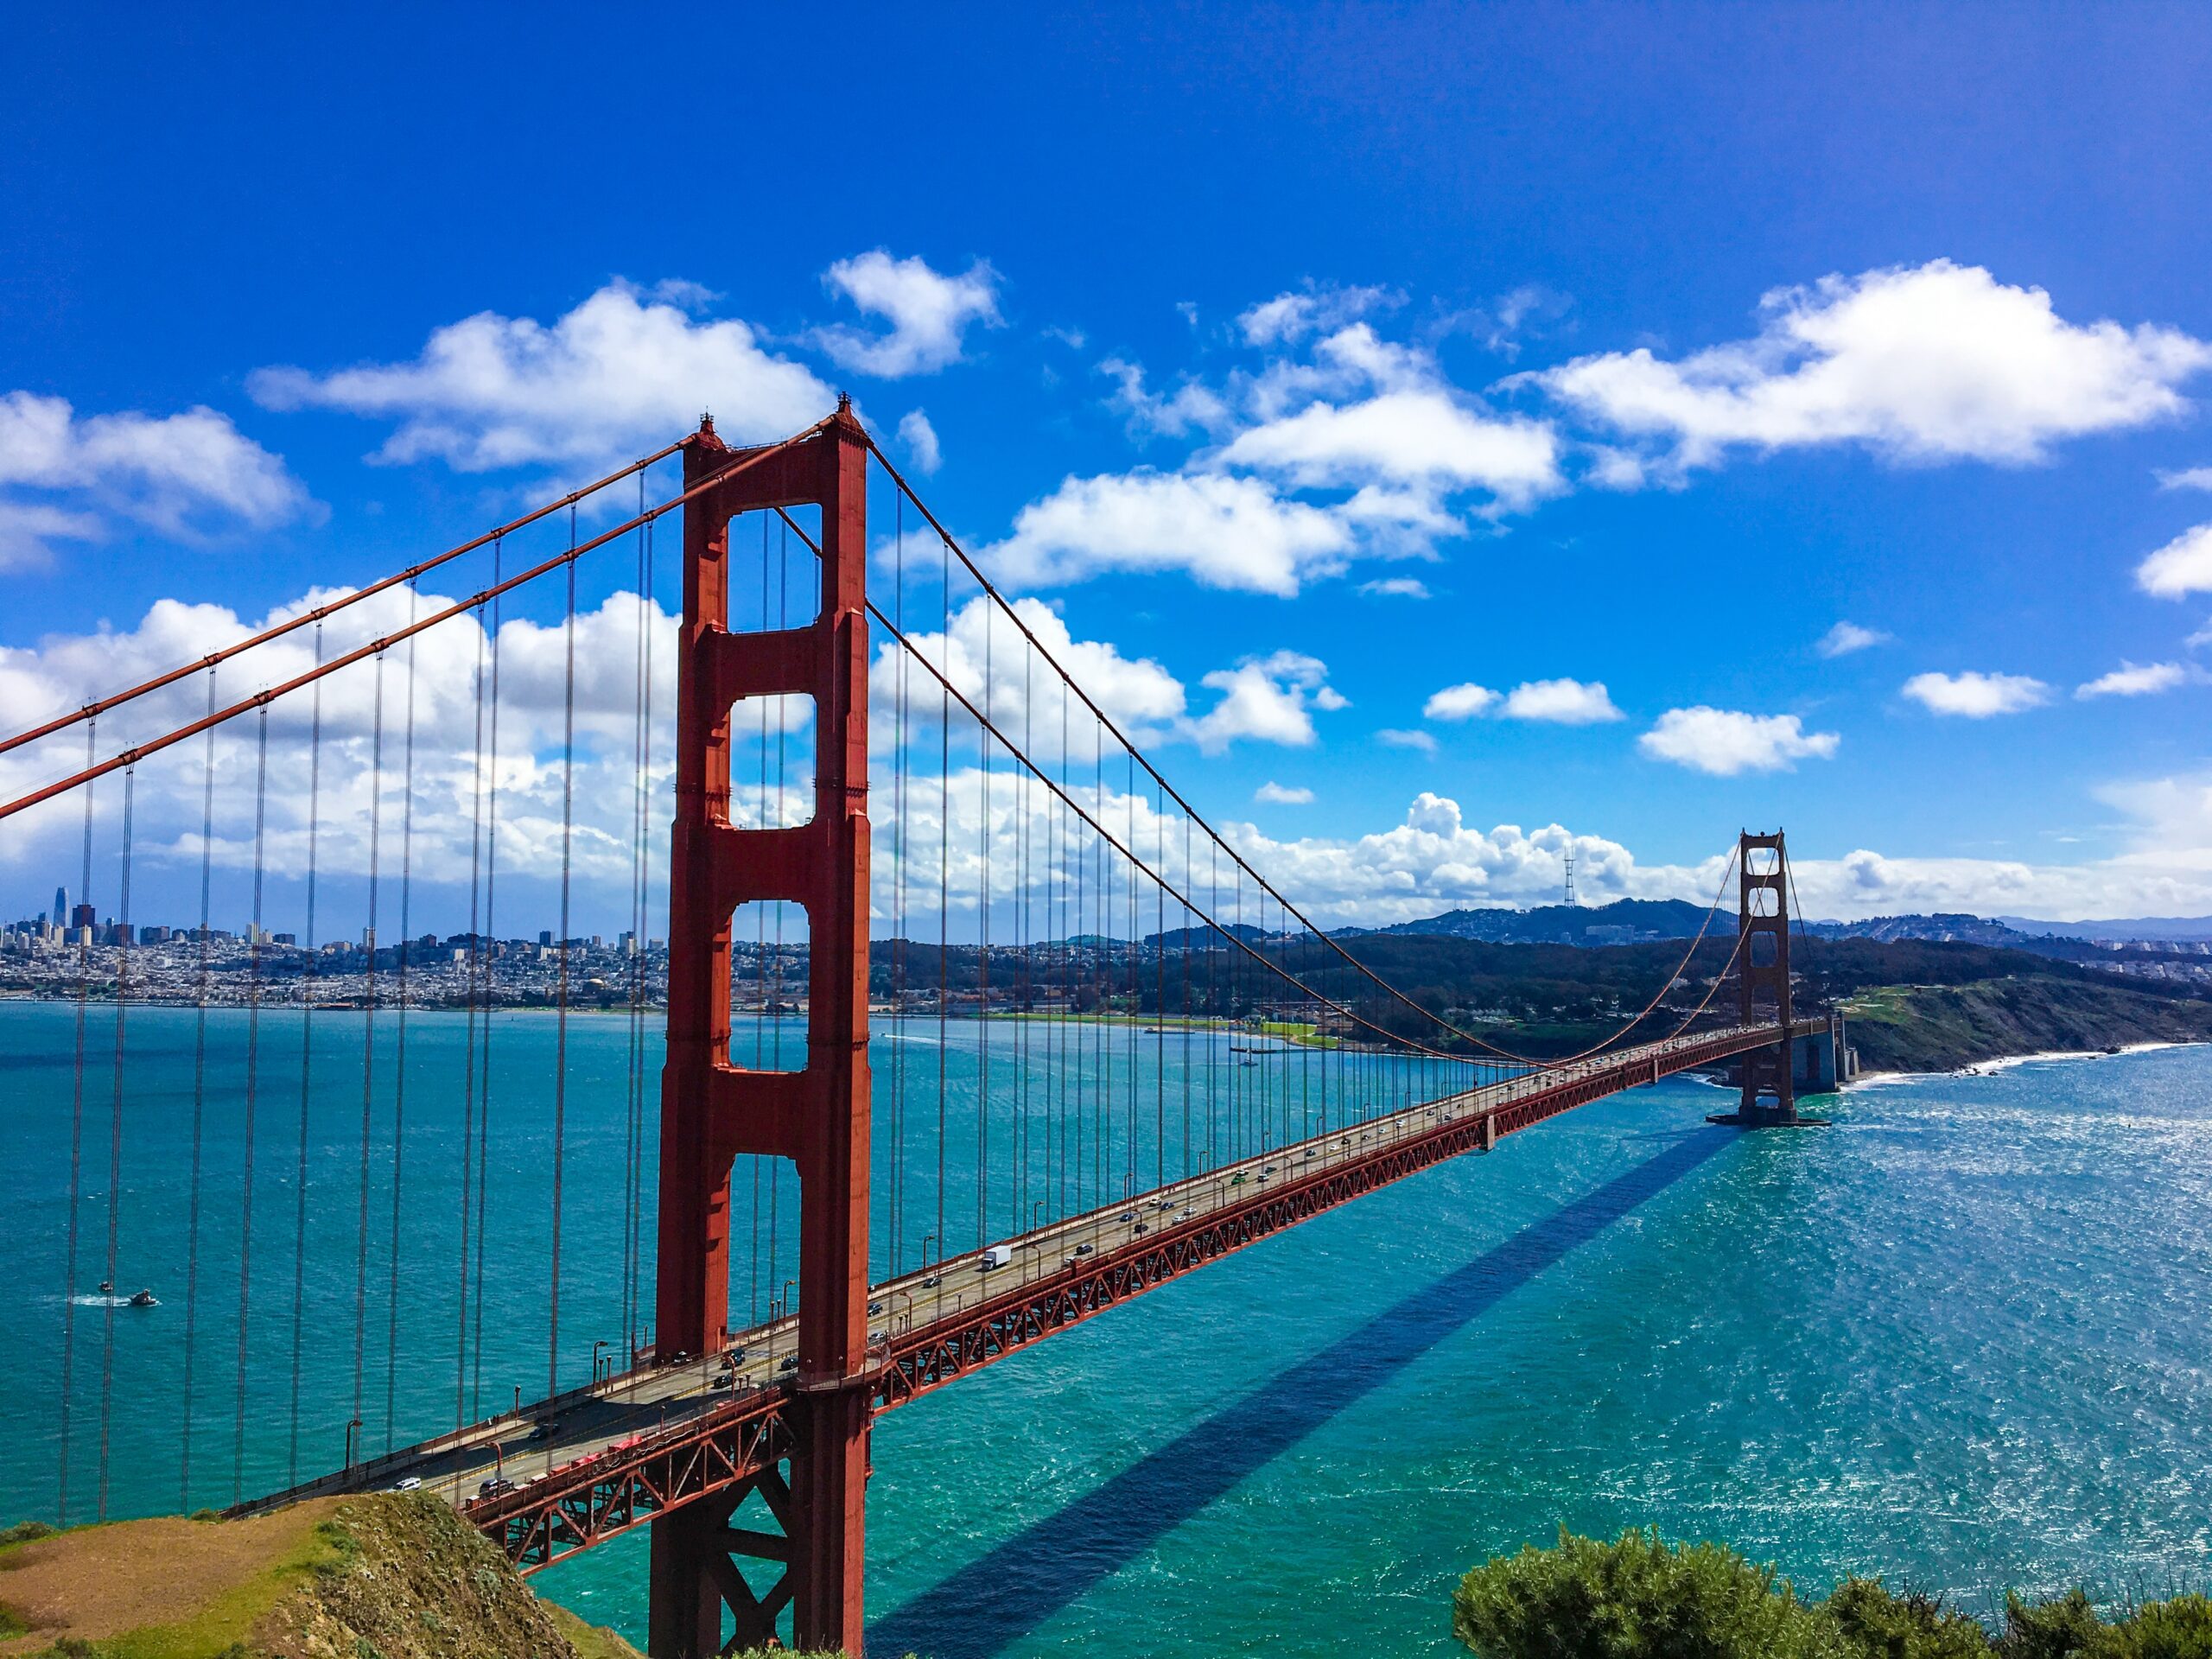 The Golden Gate Bridge, in San Francisco, CA.